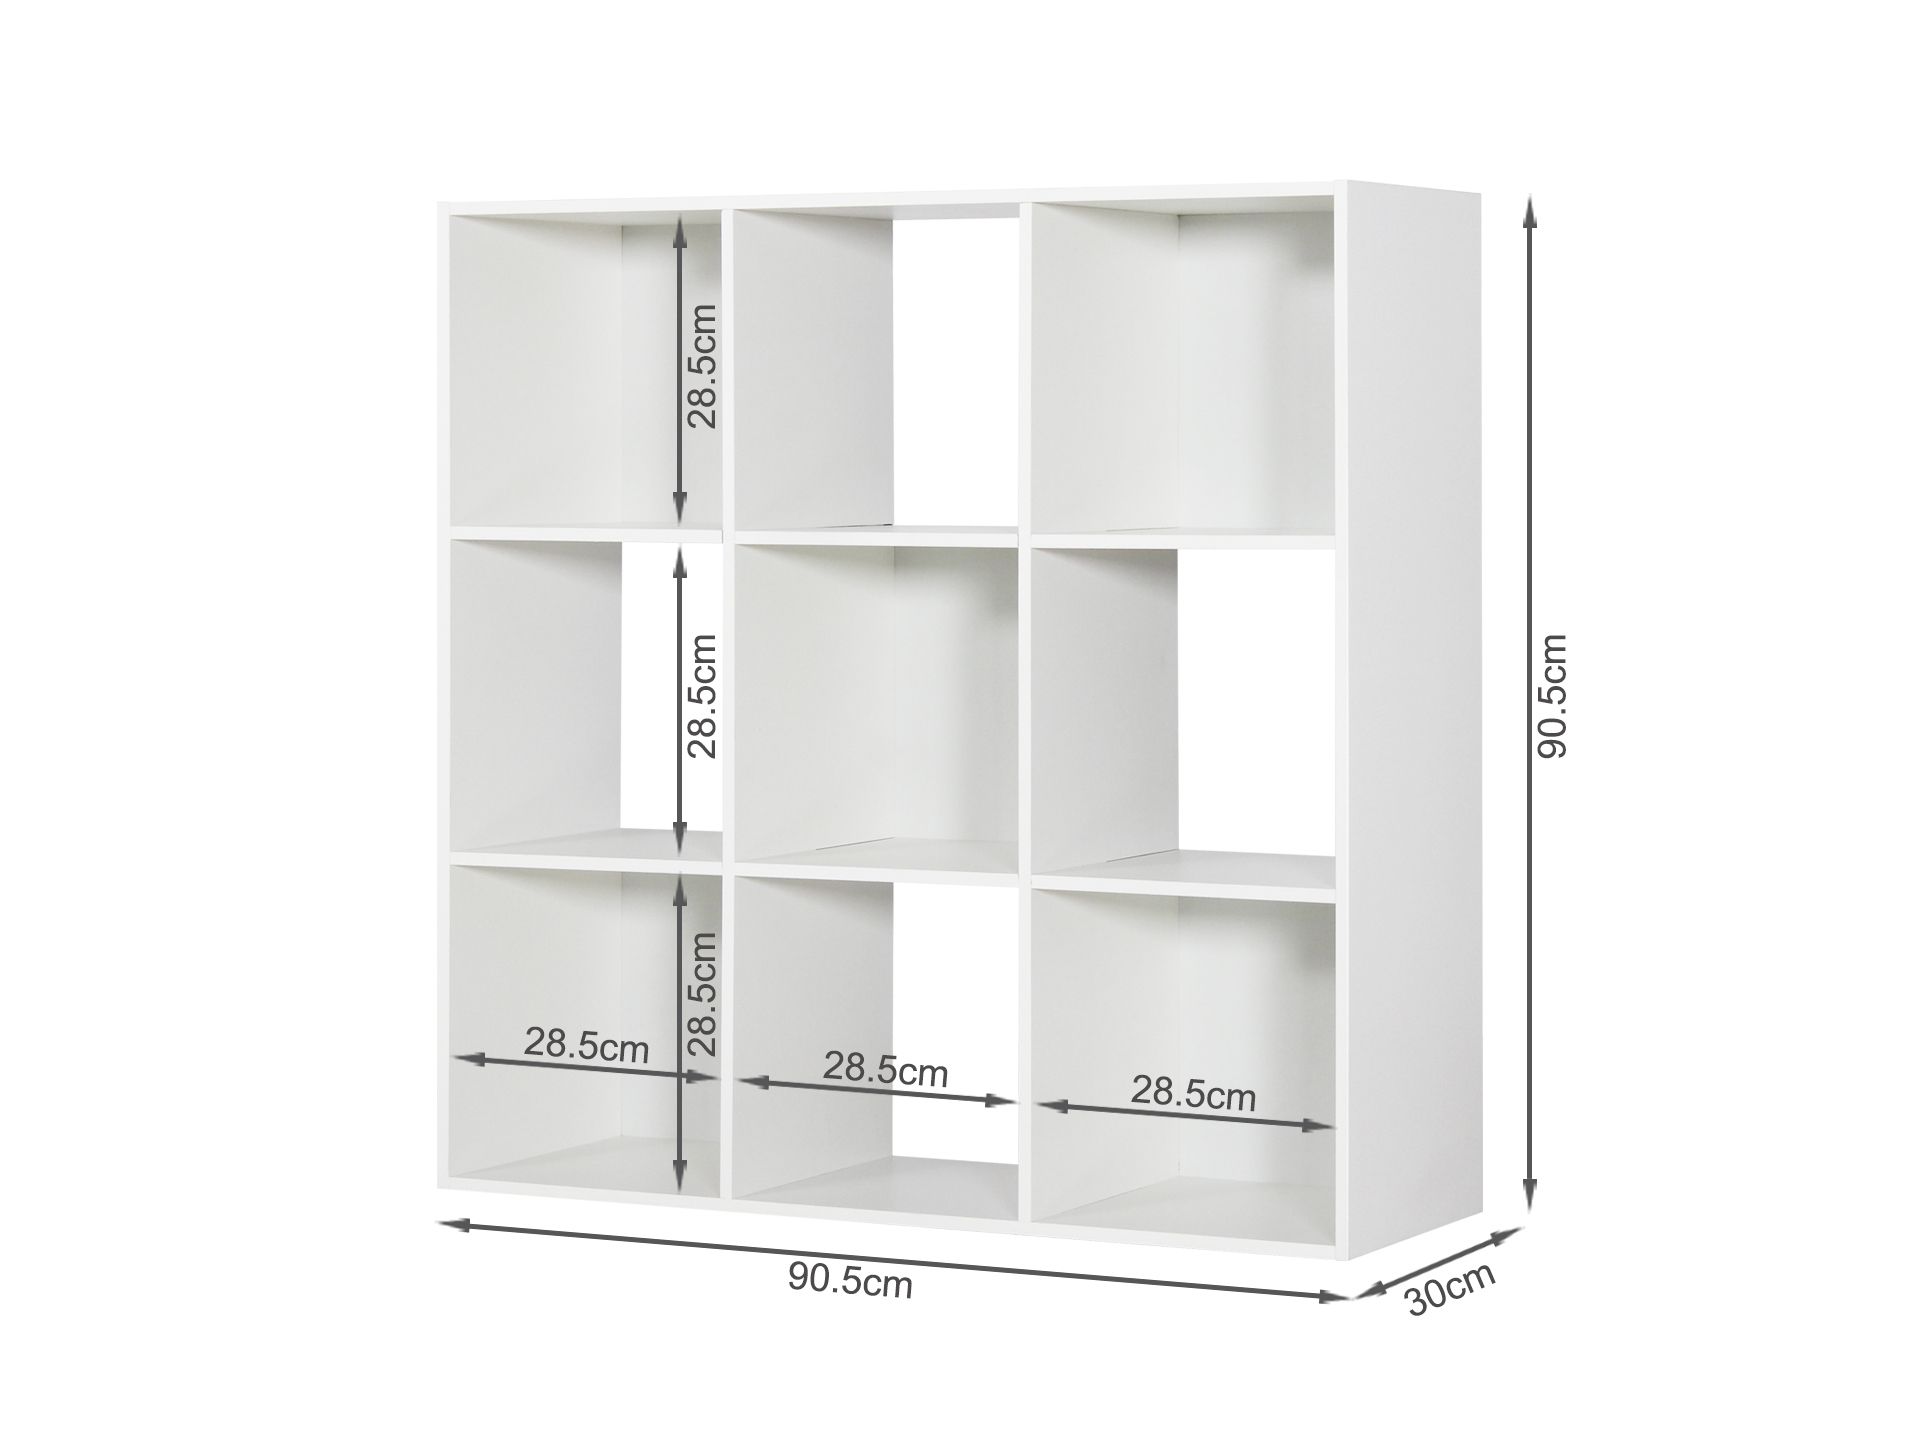 Kivu Bookshelf 9 Cube Bookcase Stand Rack - White